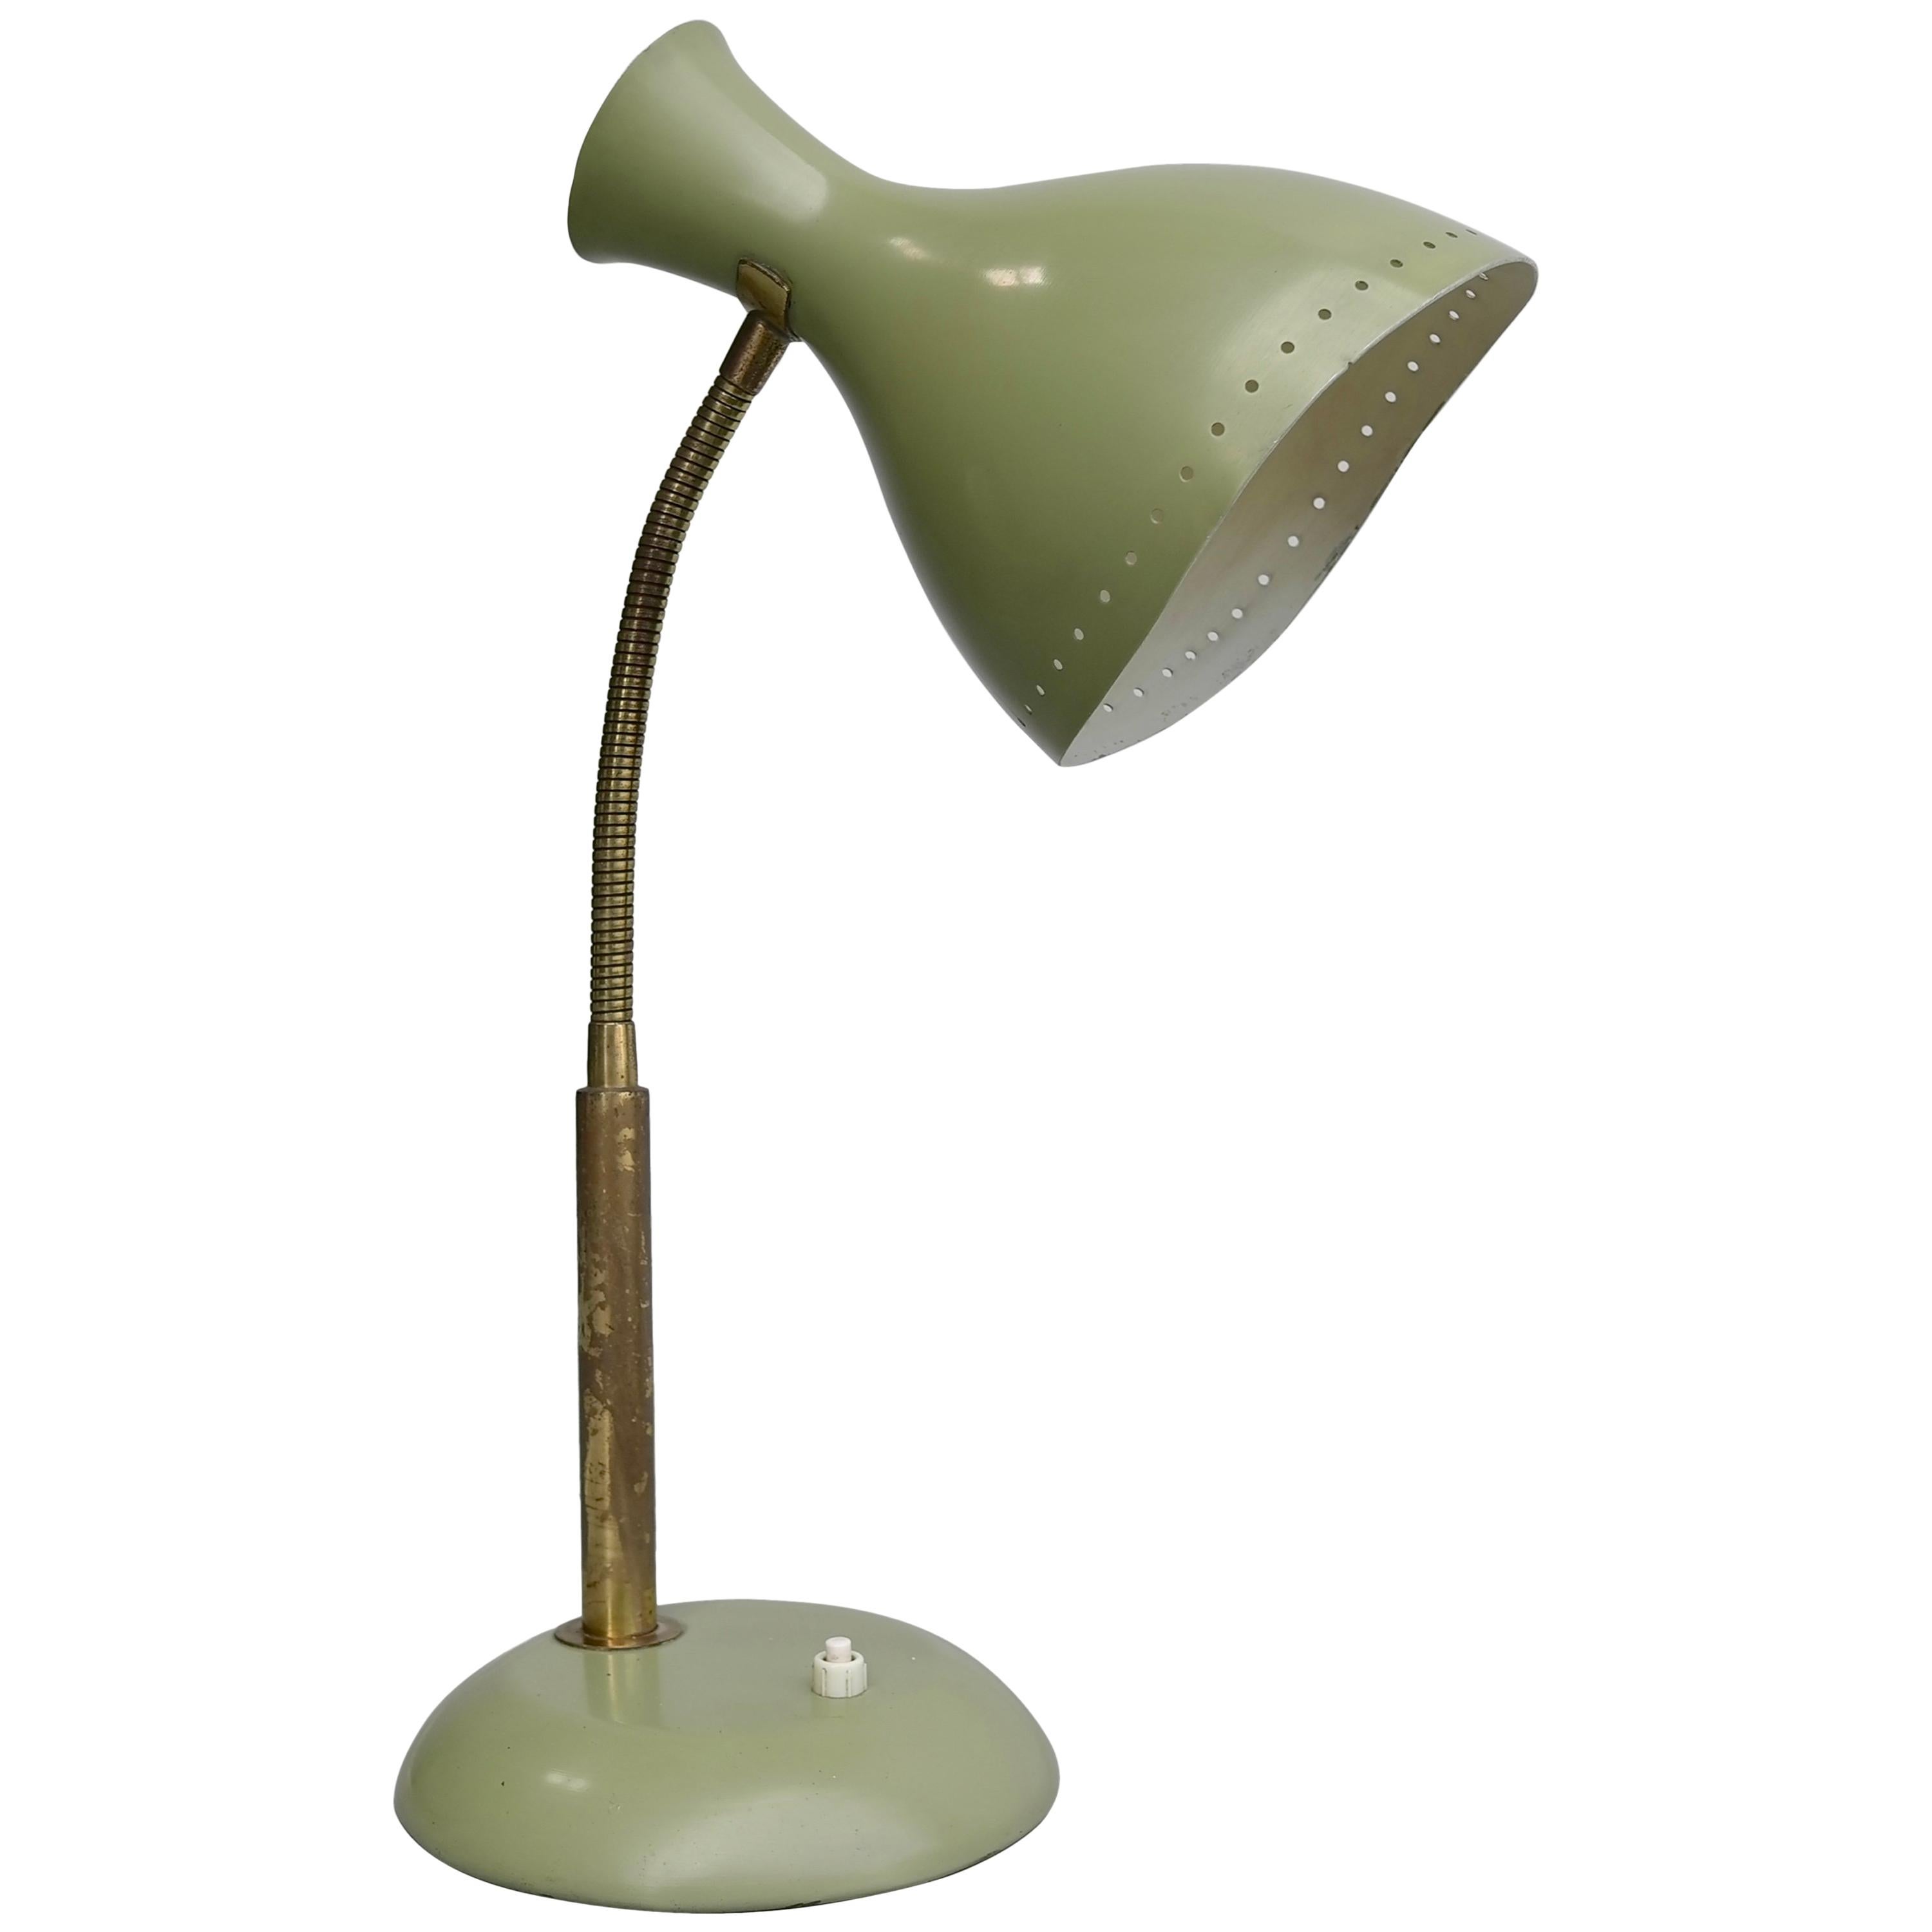 Olivgrüne Tischlampe mit Messingdetails, Italien 1950er Jahre